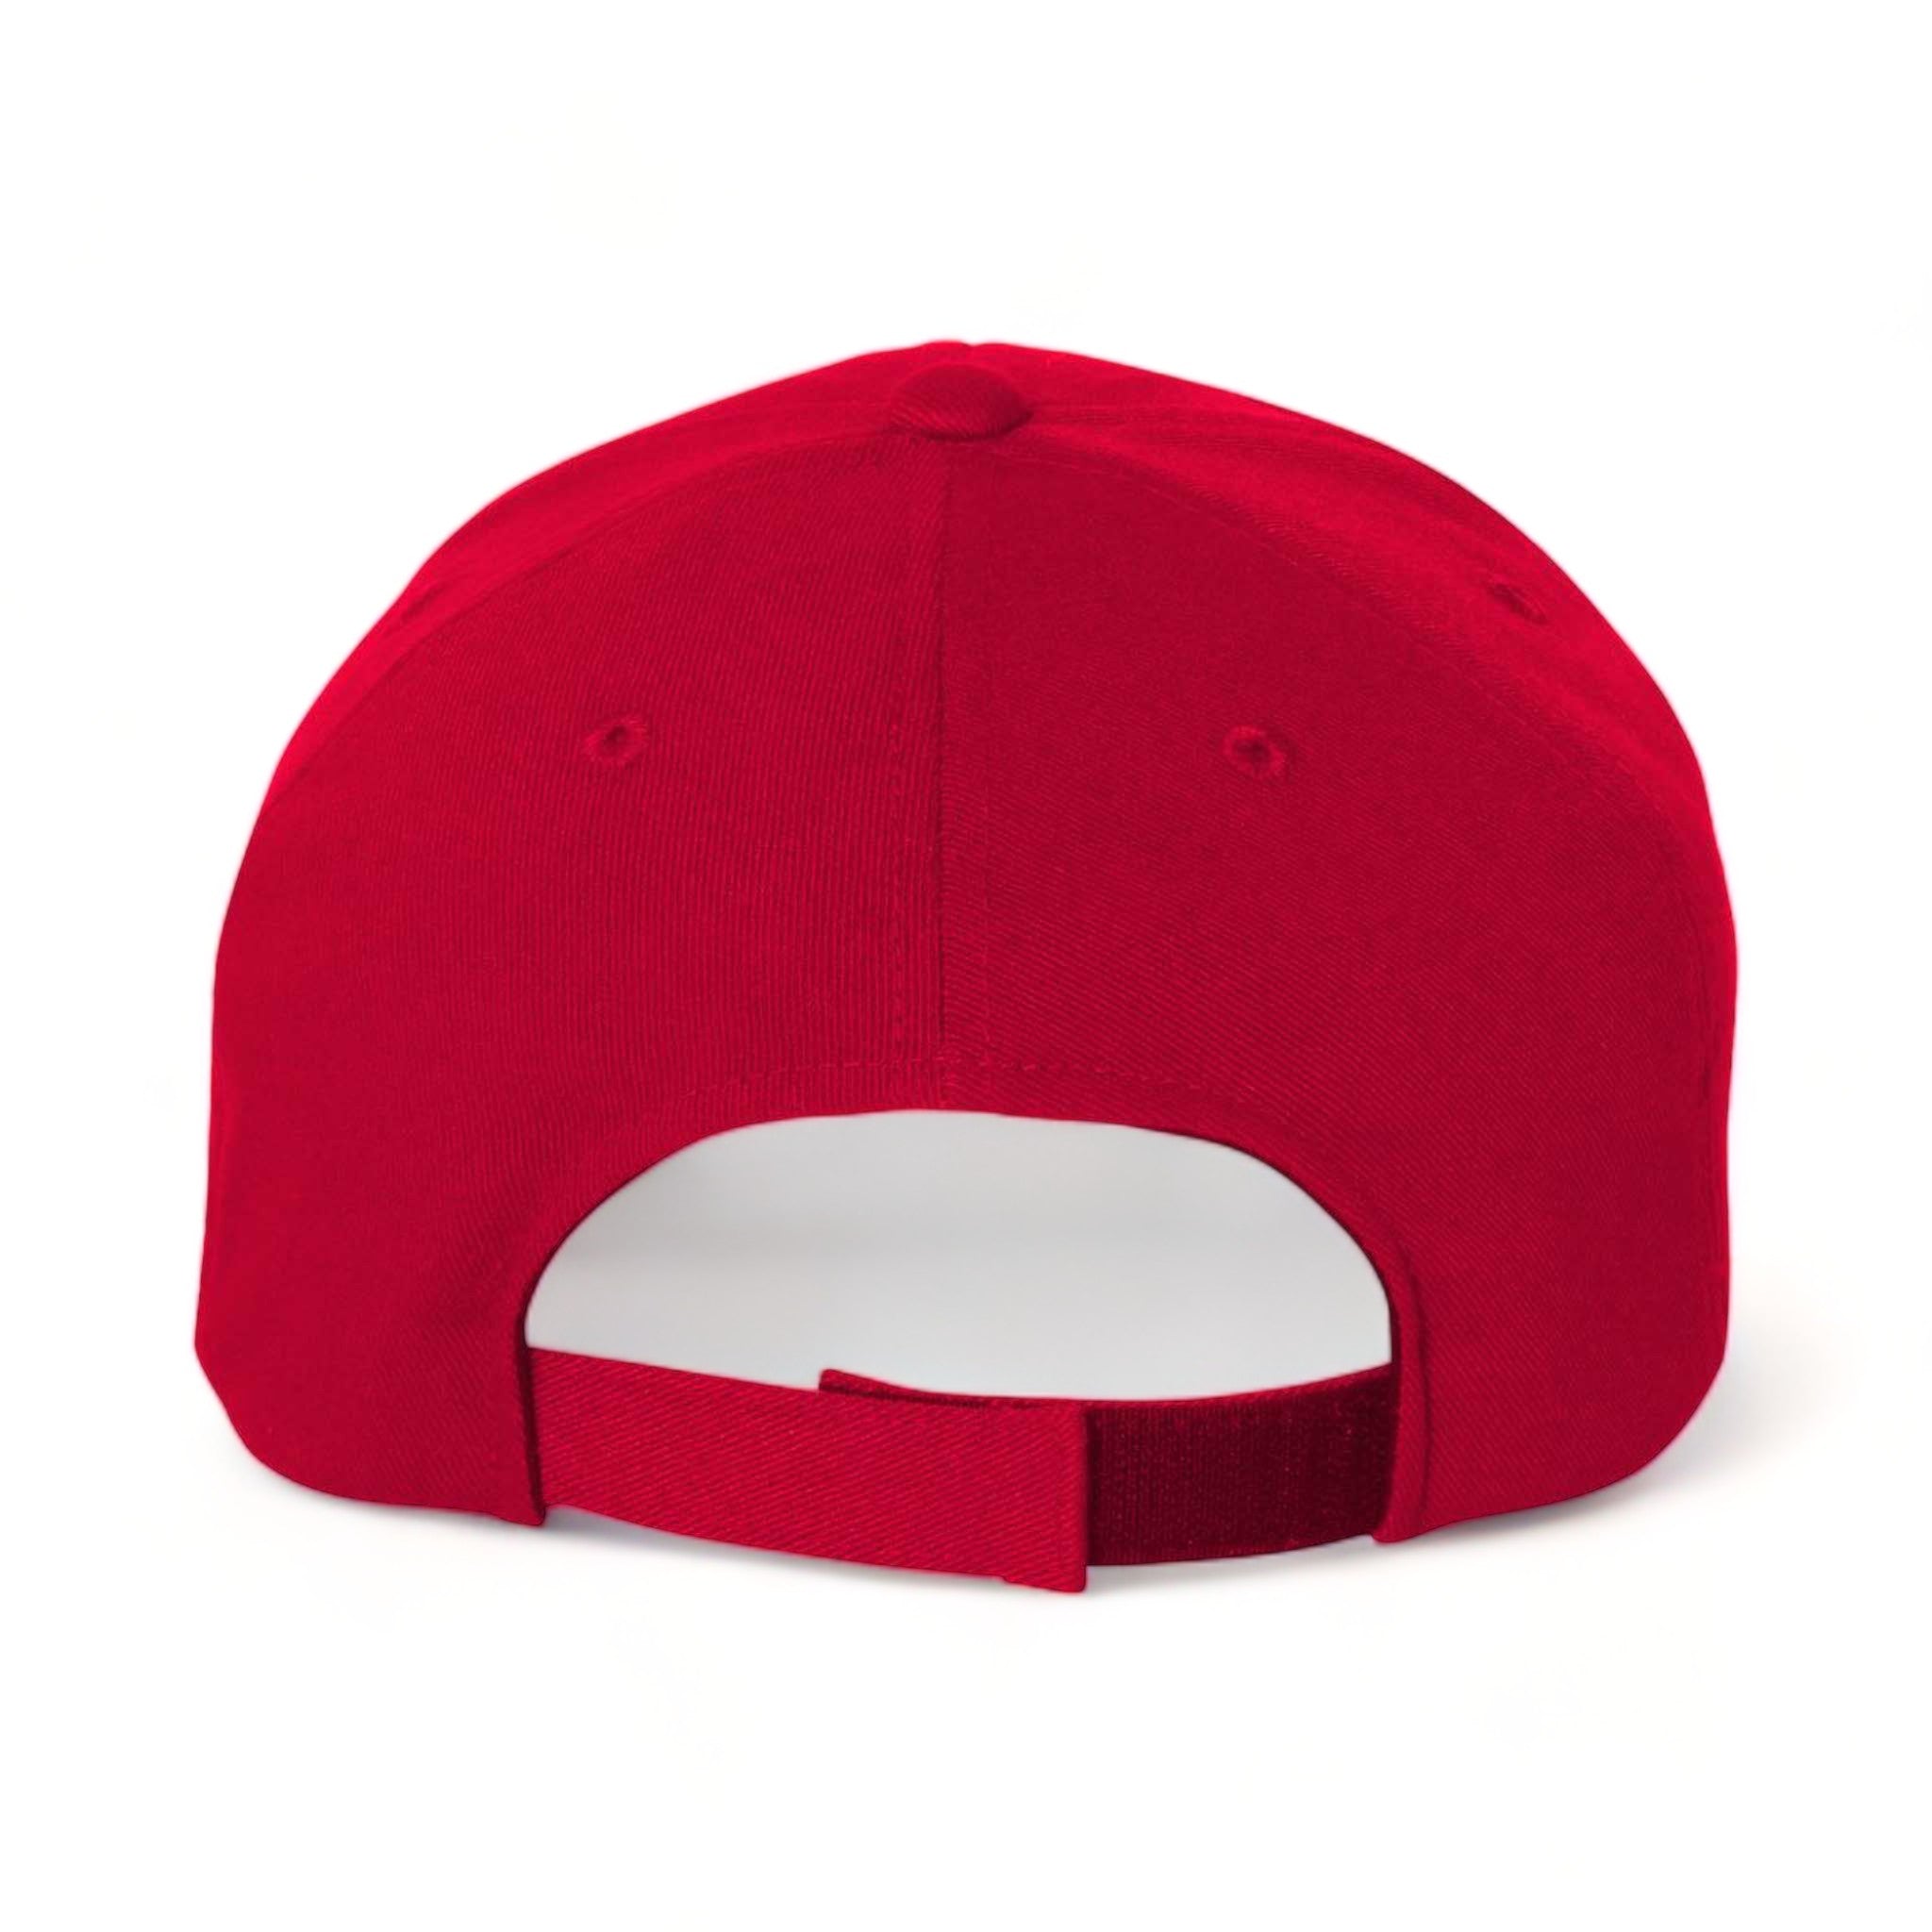 Back view of Flexfit 110C custom hat in red